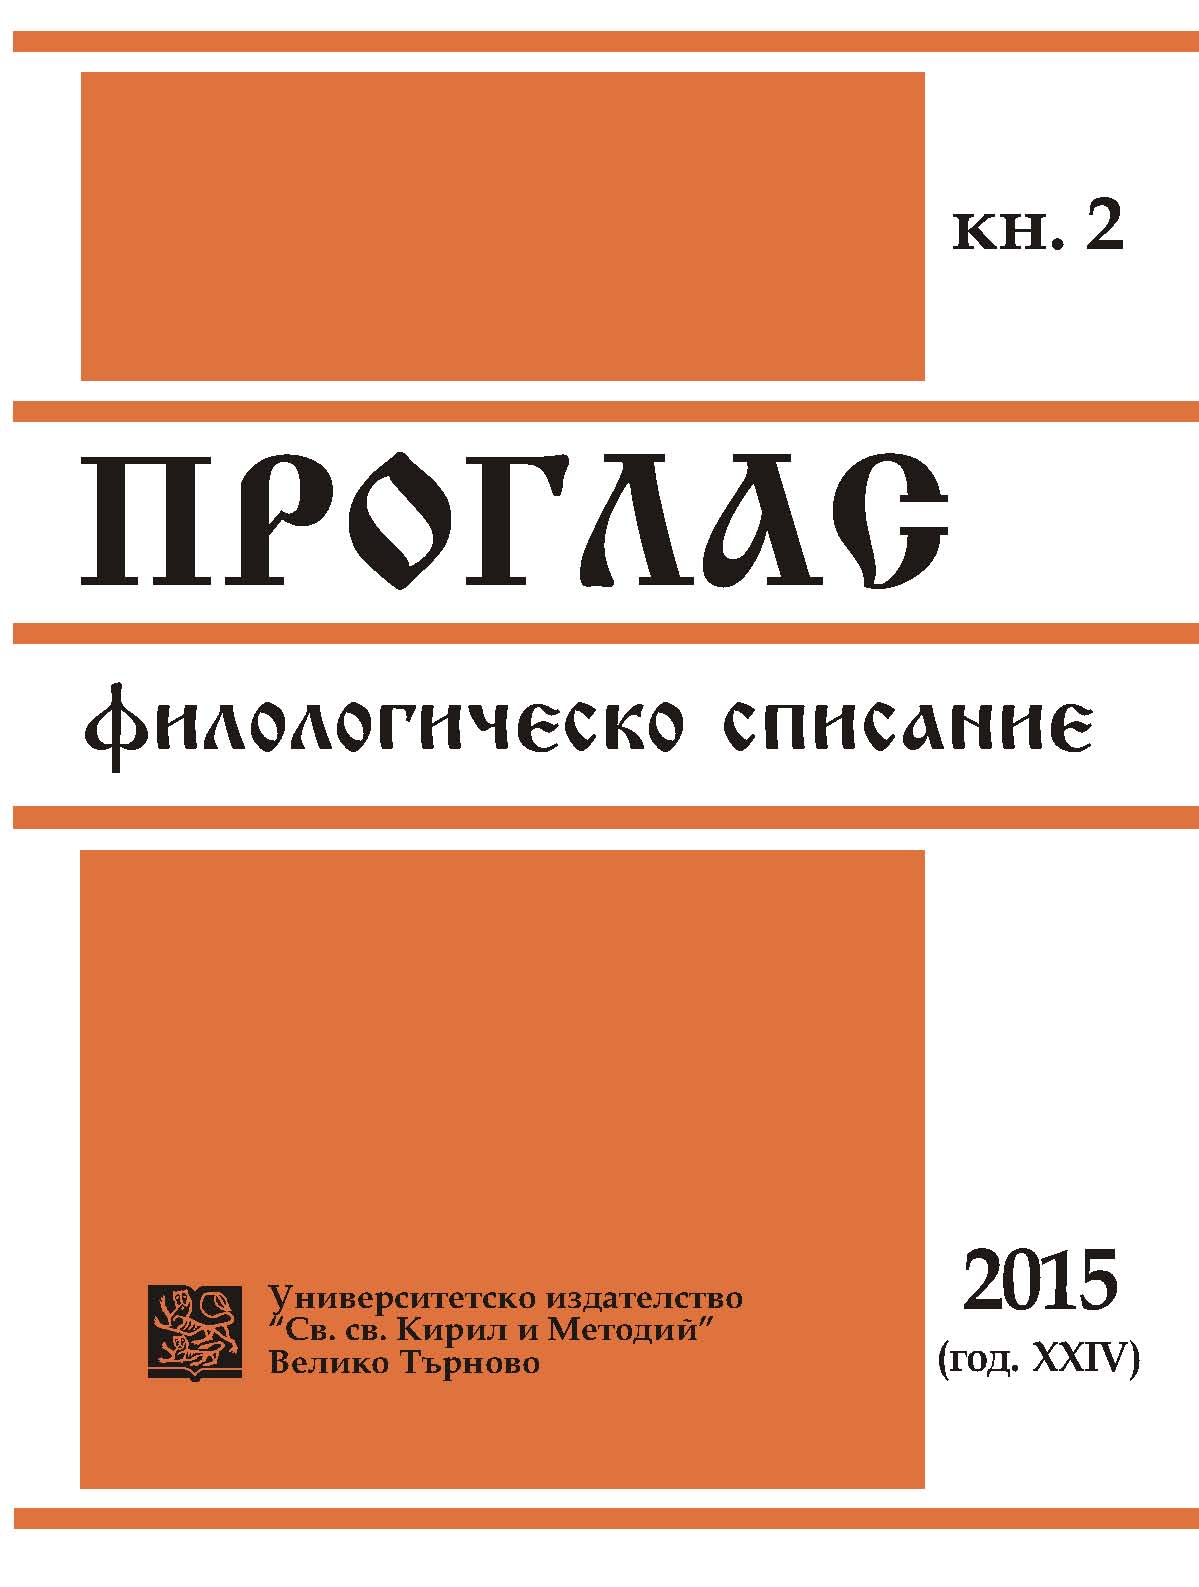 Mavro Orbini’s The Realm of the Slavs, Sava Vladislavich’s
Russian Translation and Related Research Cover Image